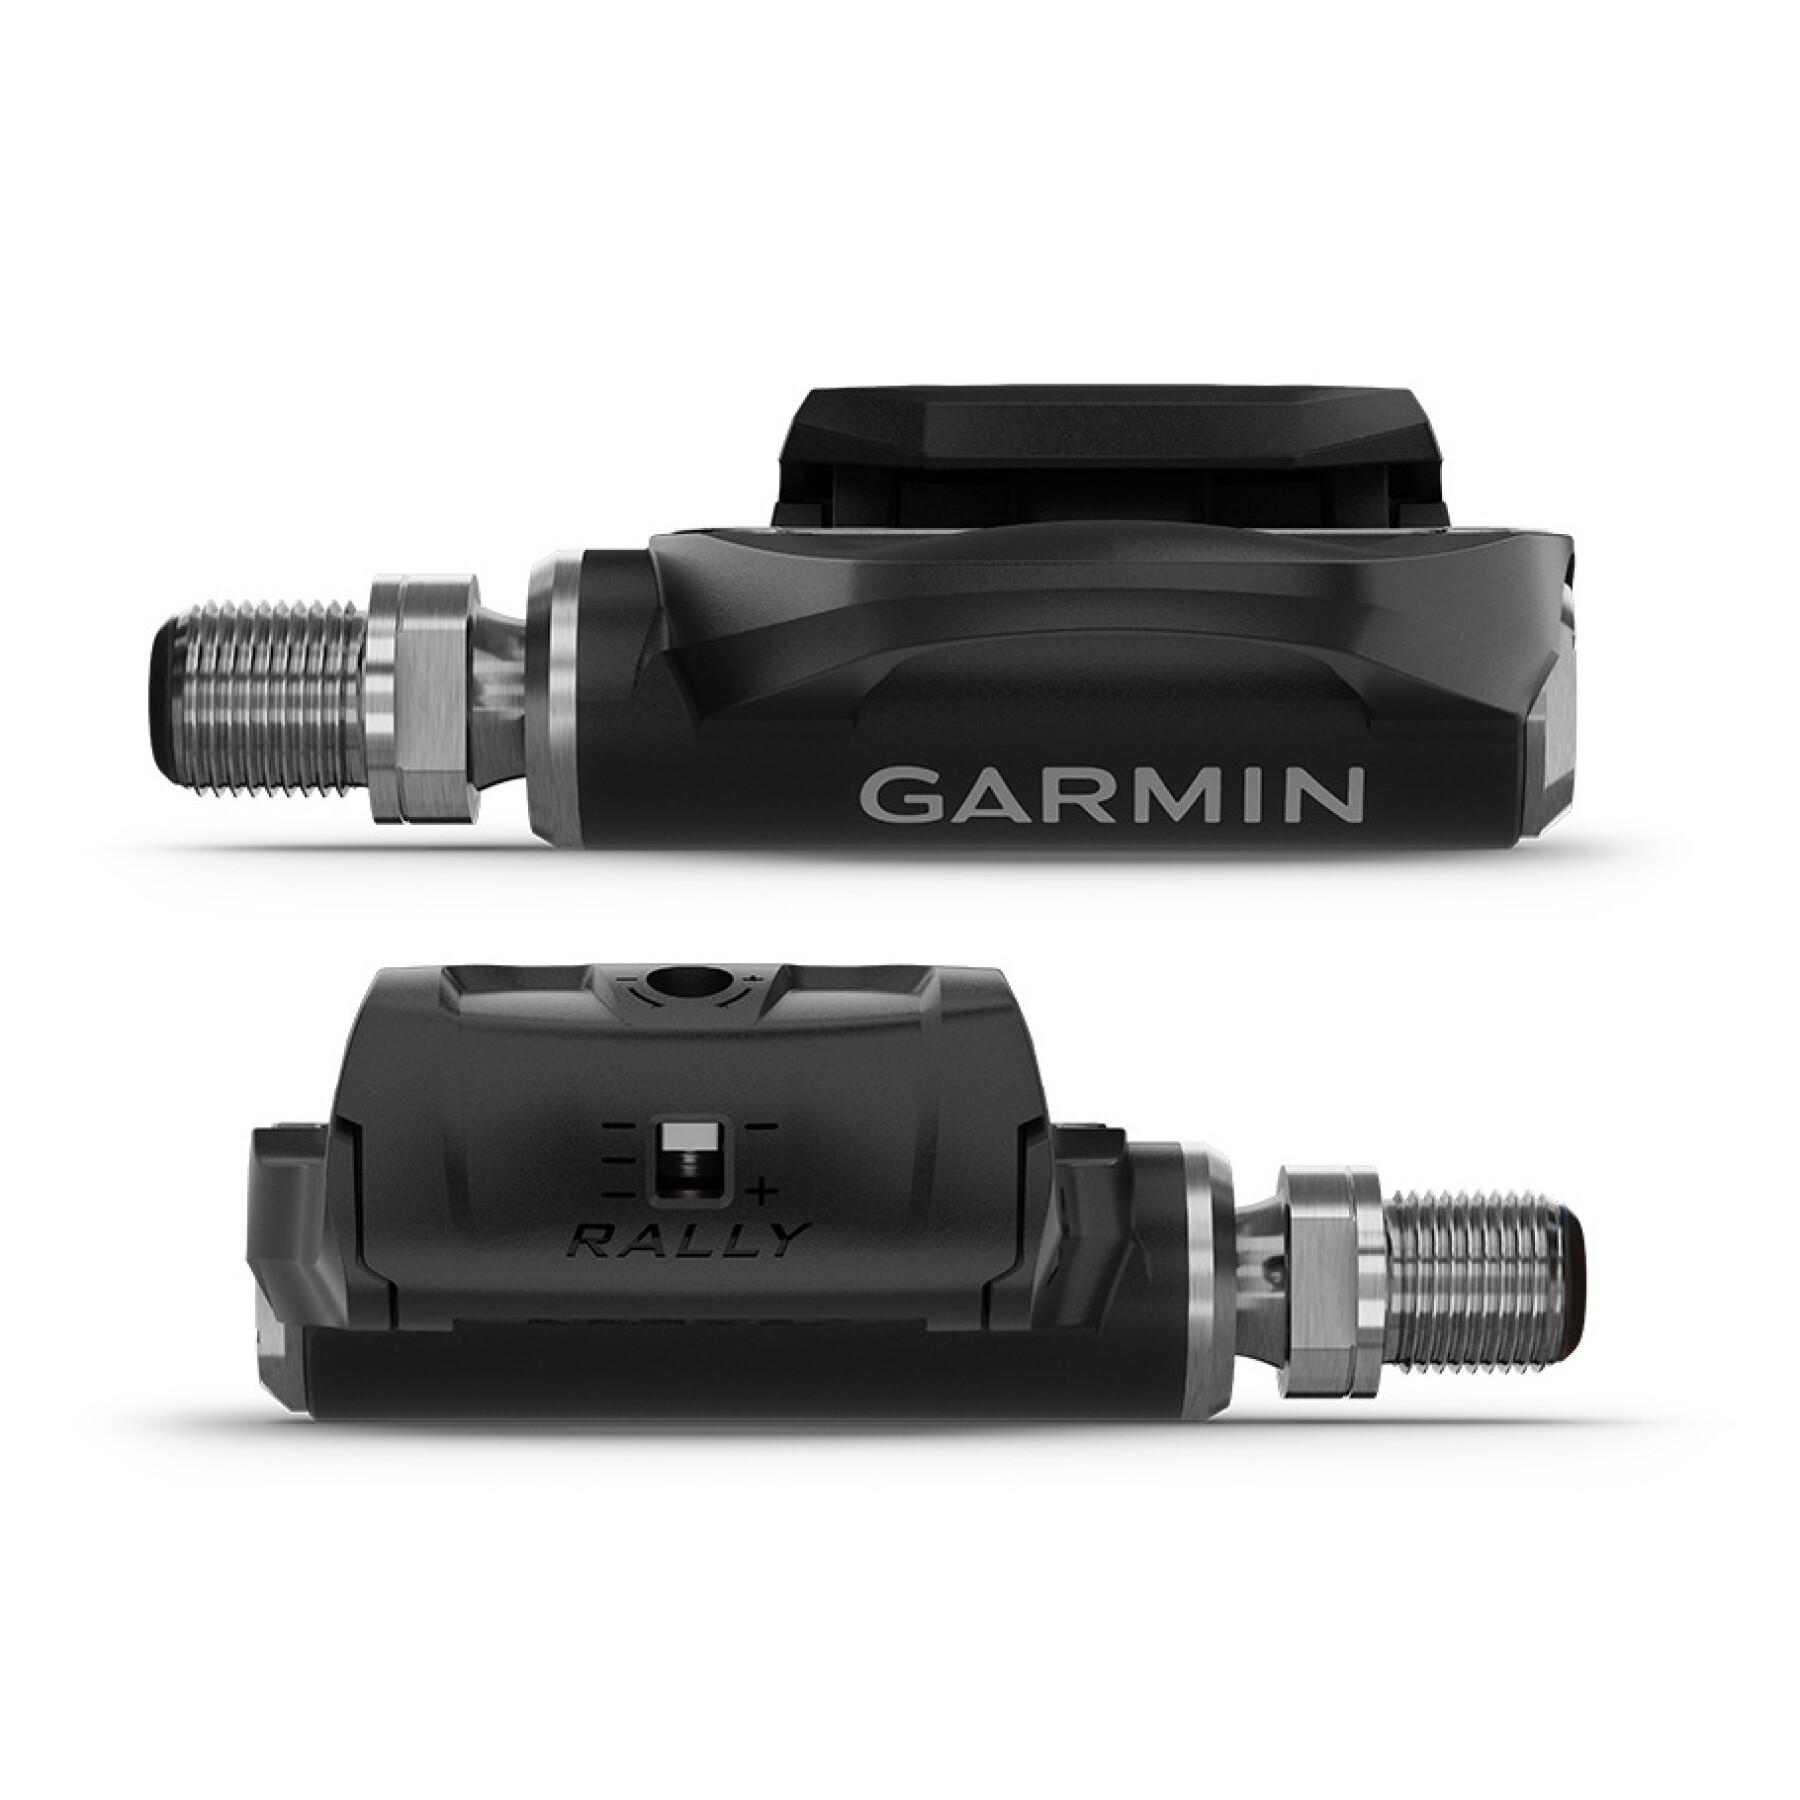 Effektsensor Garmin Rally rs 100 shimano spd-sl type